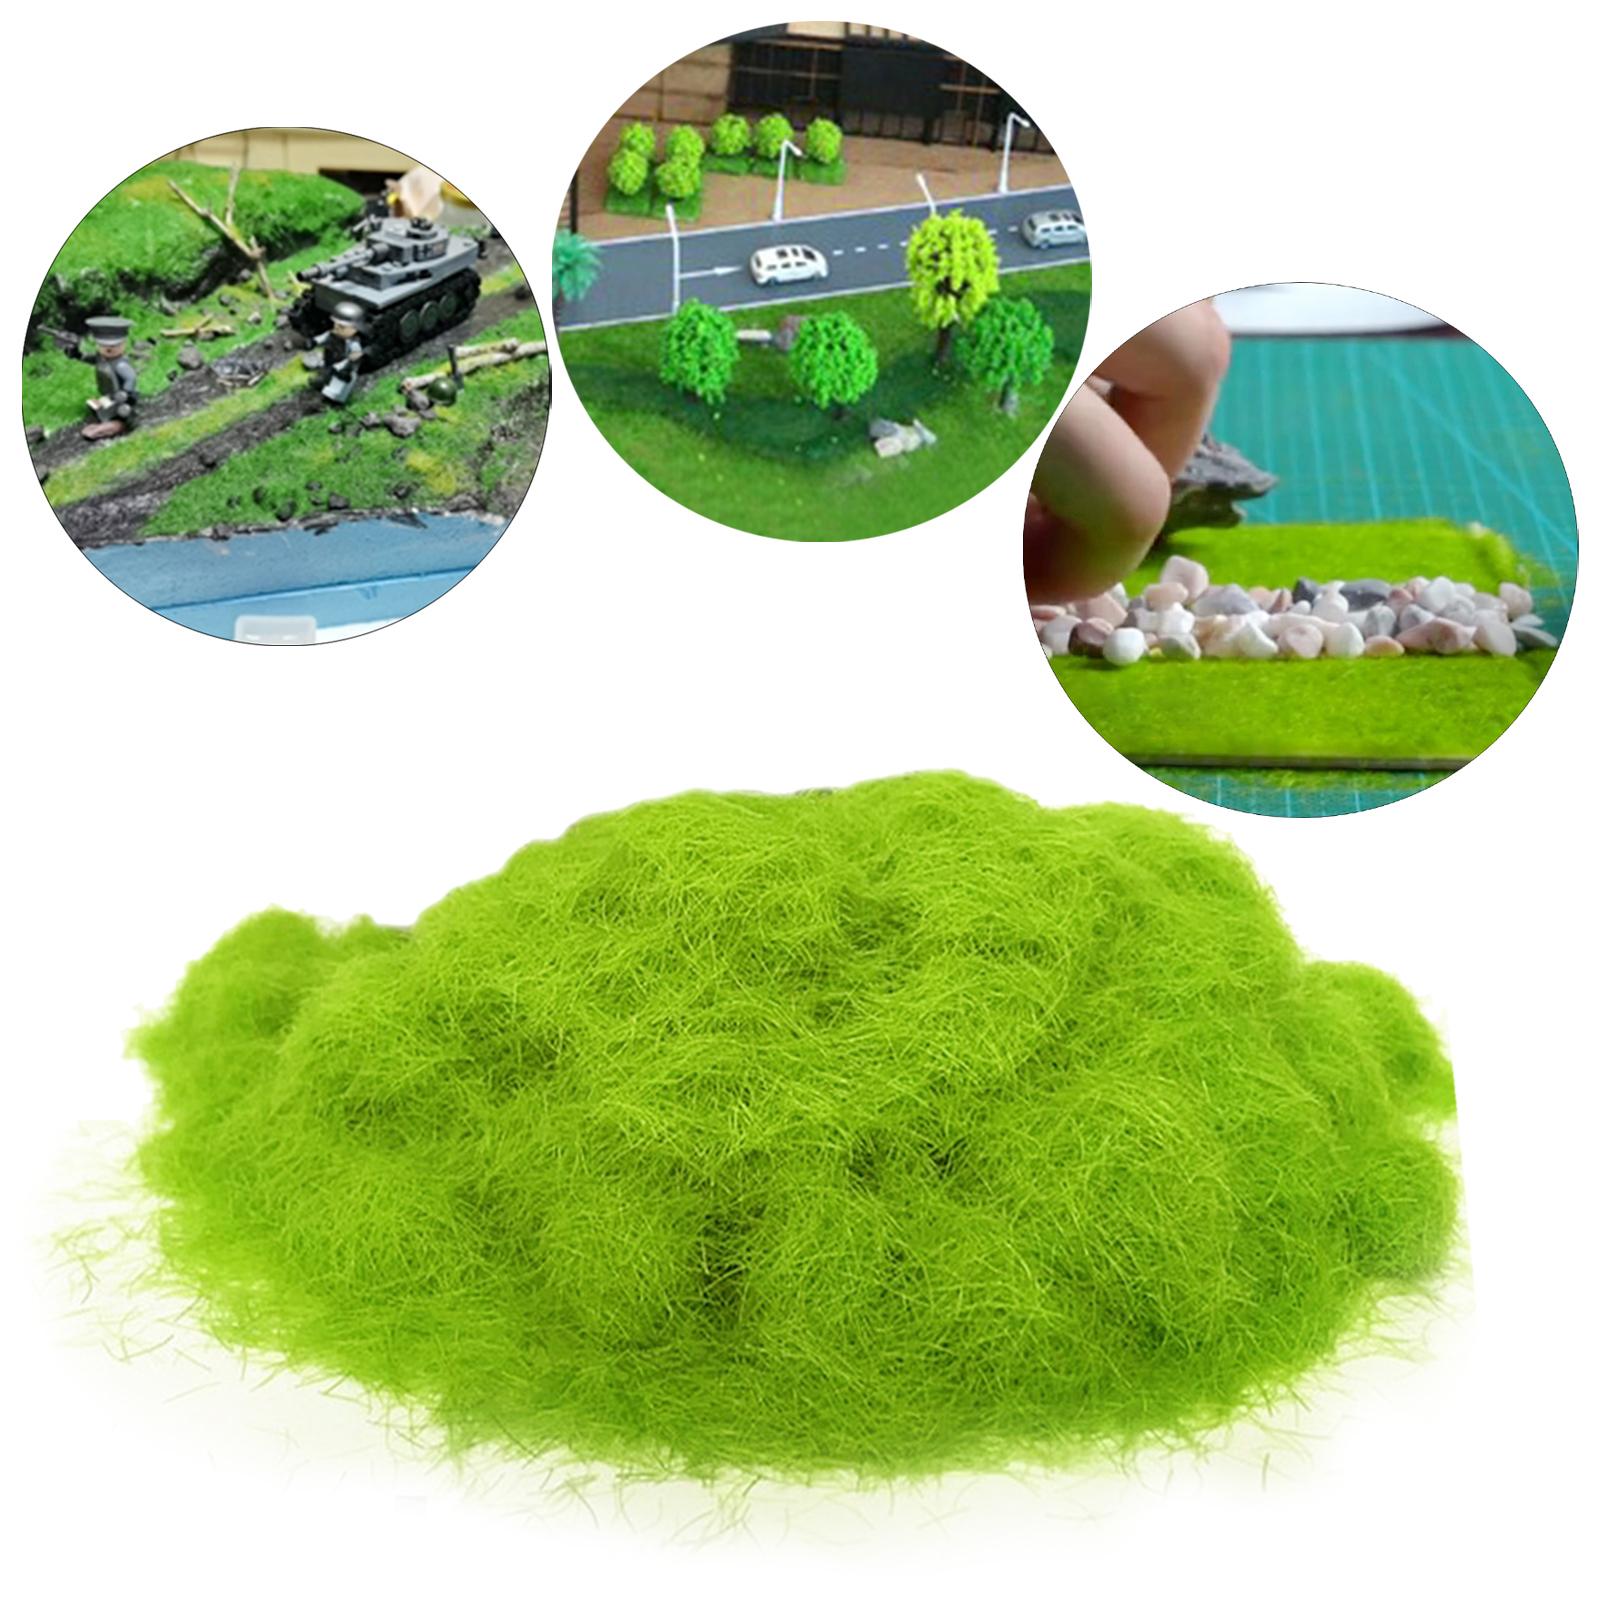 Miniature Static Grass 5mm Fairy Garden Scene Model Sand Table Grass Powder tender green